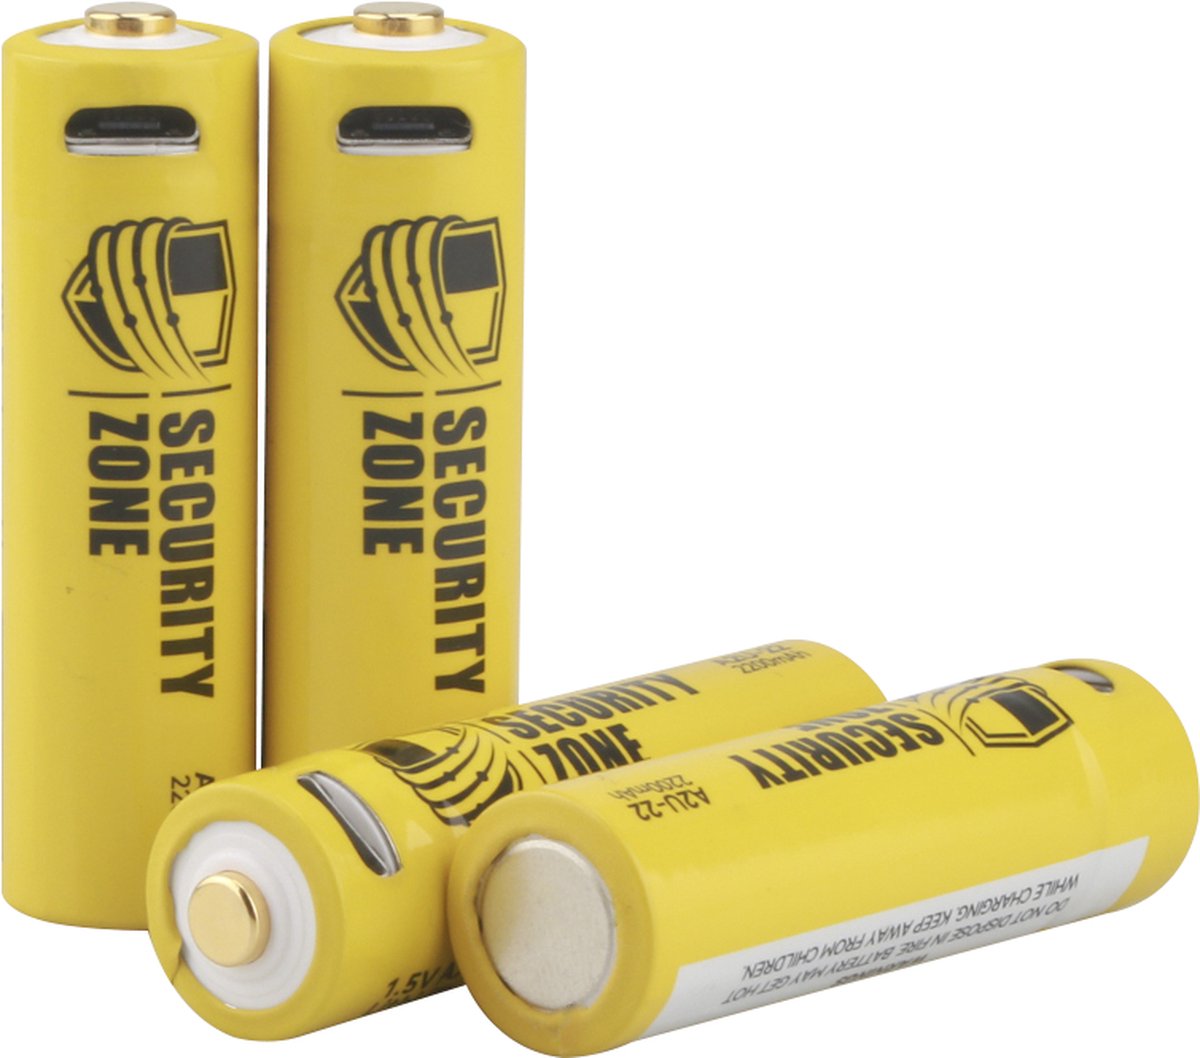 4 STUKS Oplaadbare AA Li-ion batterijen - A2U-22 AA 1.5V - USB Oplaadbare Lithium Ion batterijen - 3400 mWh (1.5V!) Security Zone ®